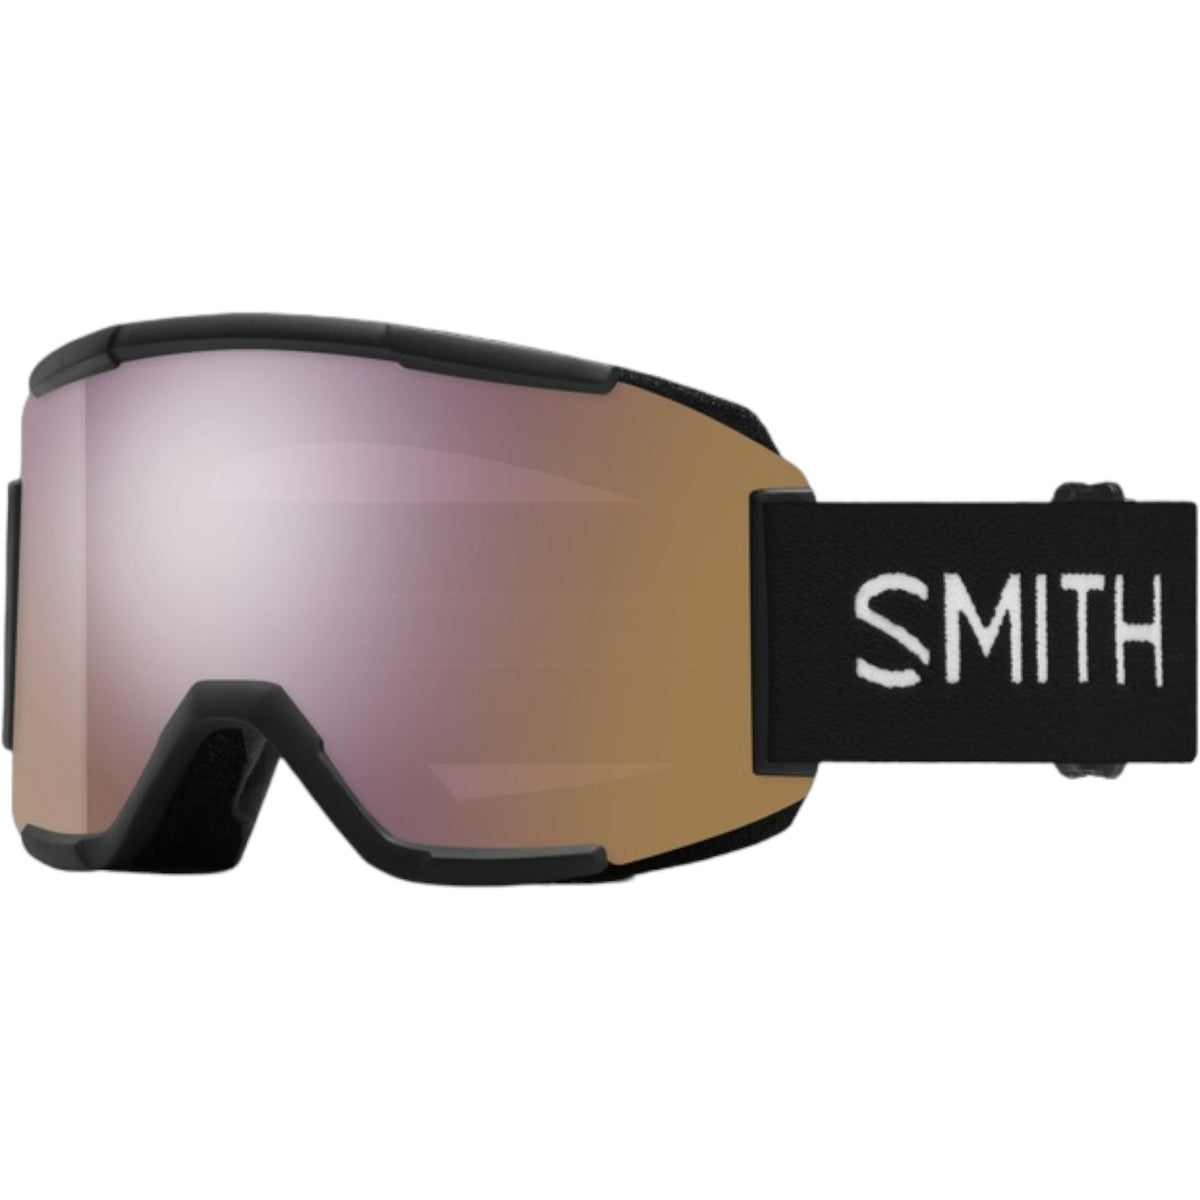 Squad Adult Ski Goggles